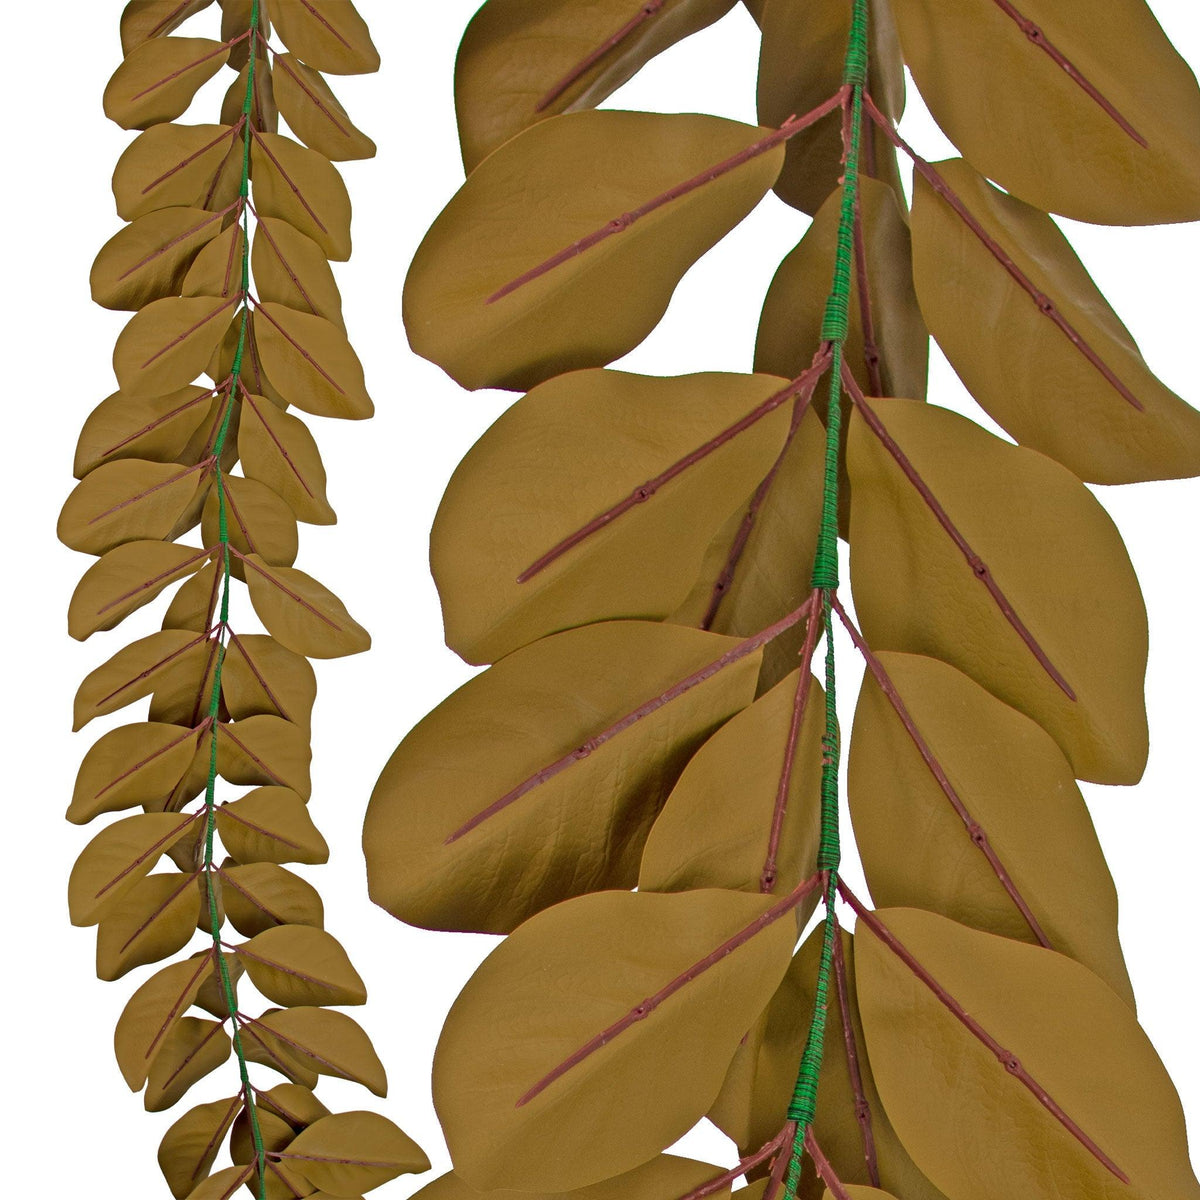 Artificial Magnolia Leaf Garland - Lee Display